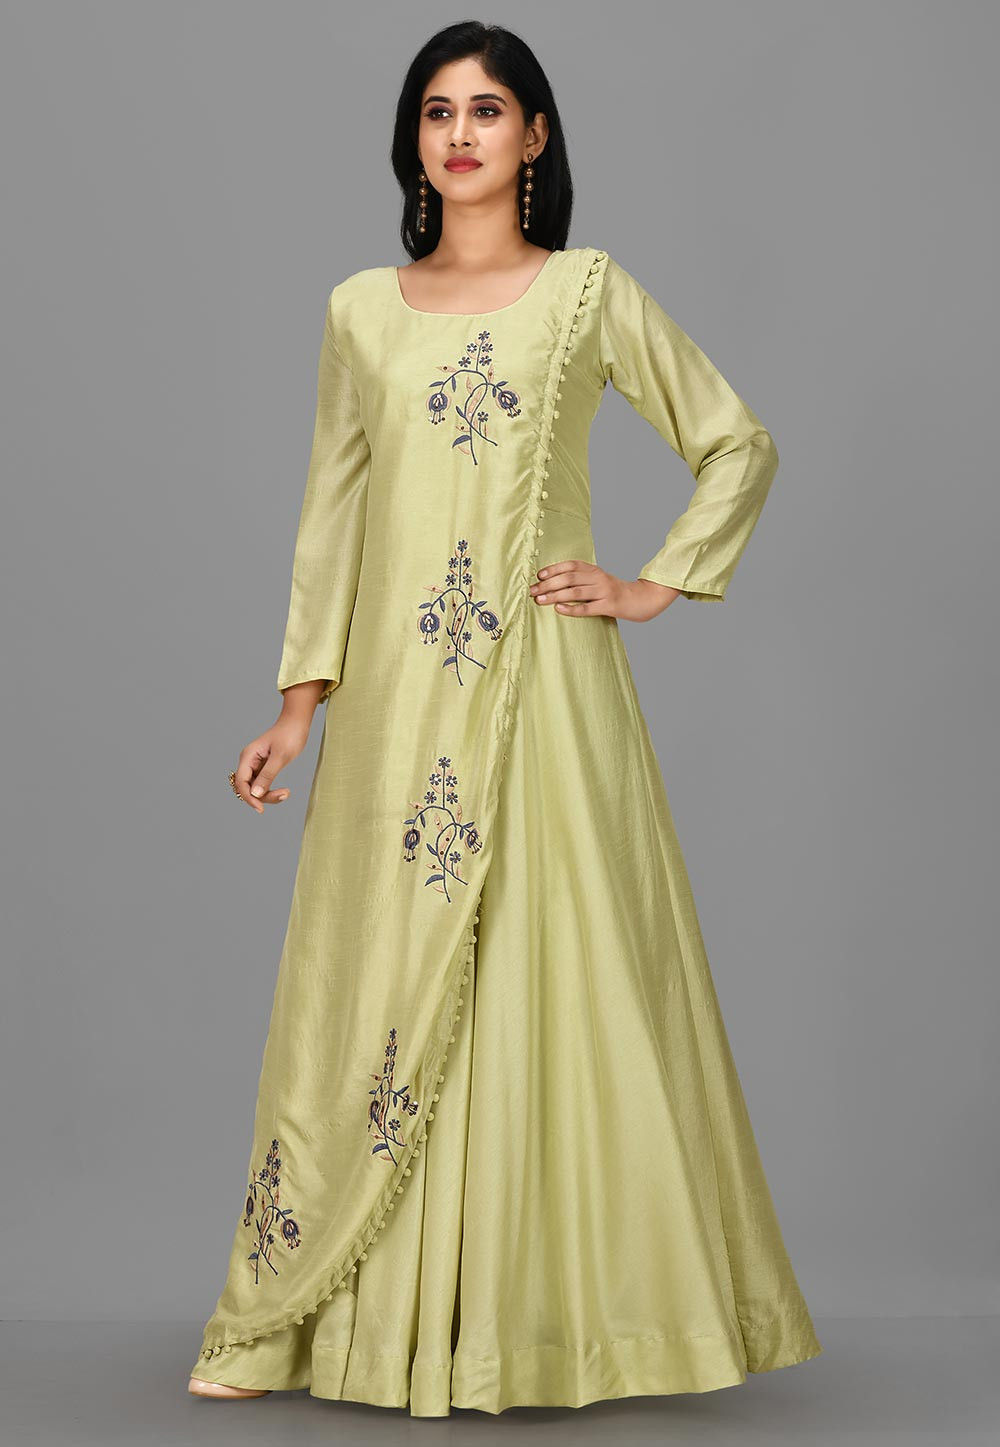 Teal Embroidered Art Silk Anarkali Salwar Kameez Suit Pakistani Gown | eBay